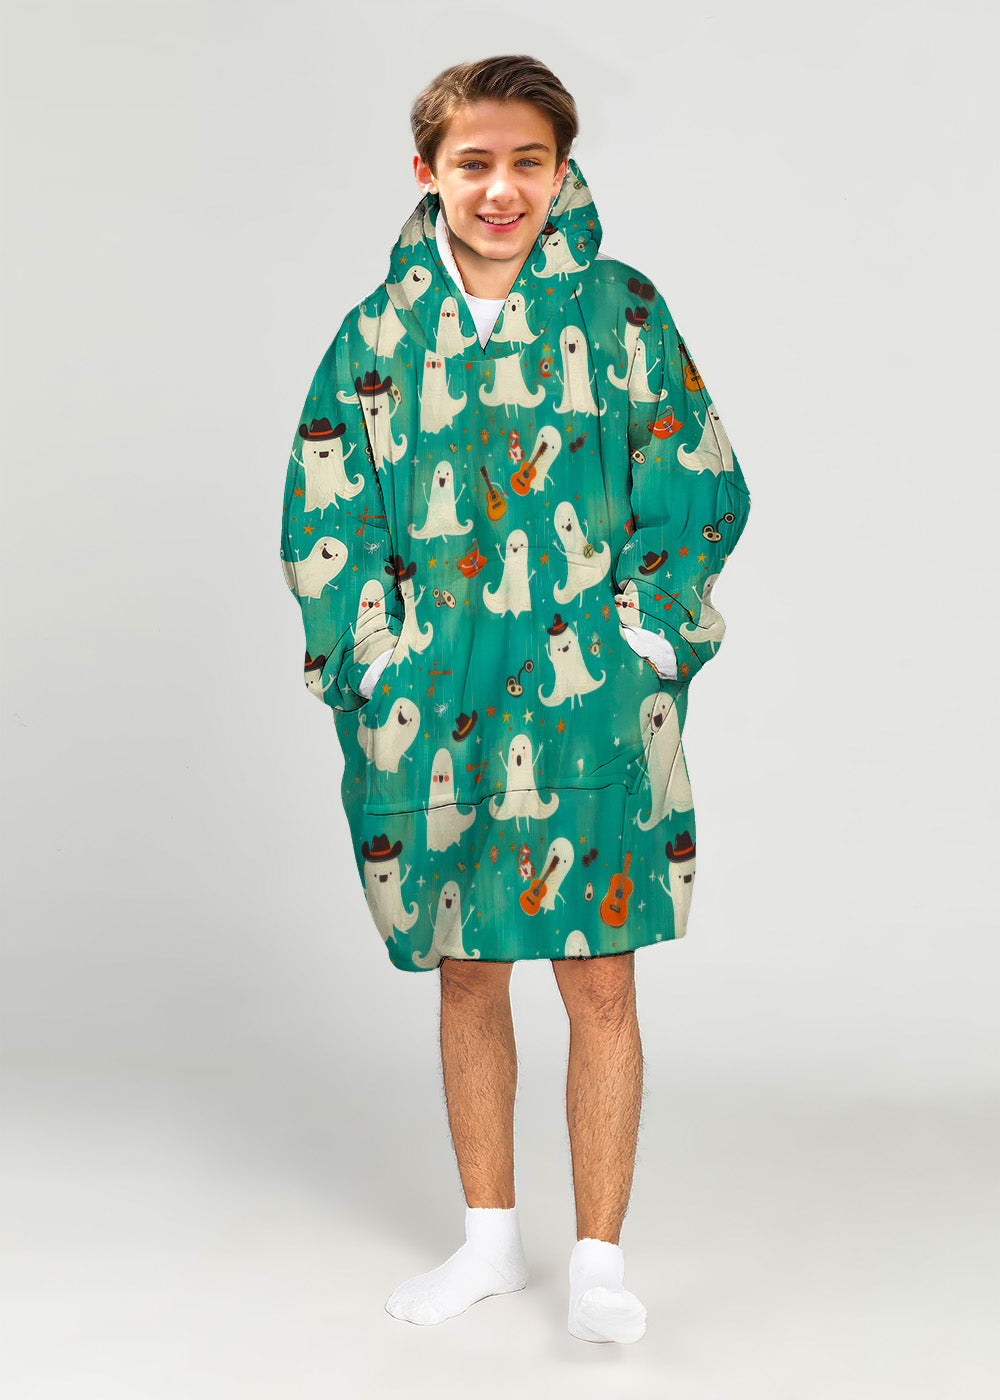 Personalized Snug Oversized Sherpa Wearable Ghost Halloween Hoodie Blanket